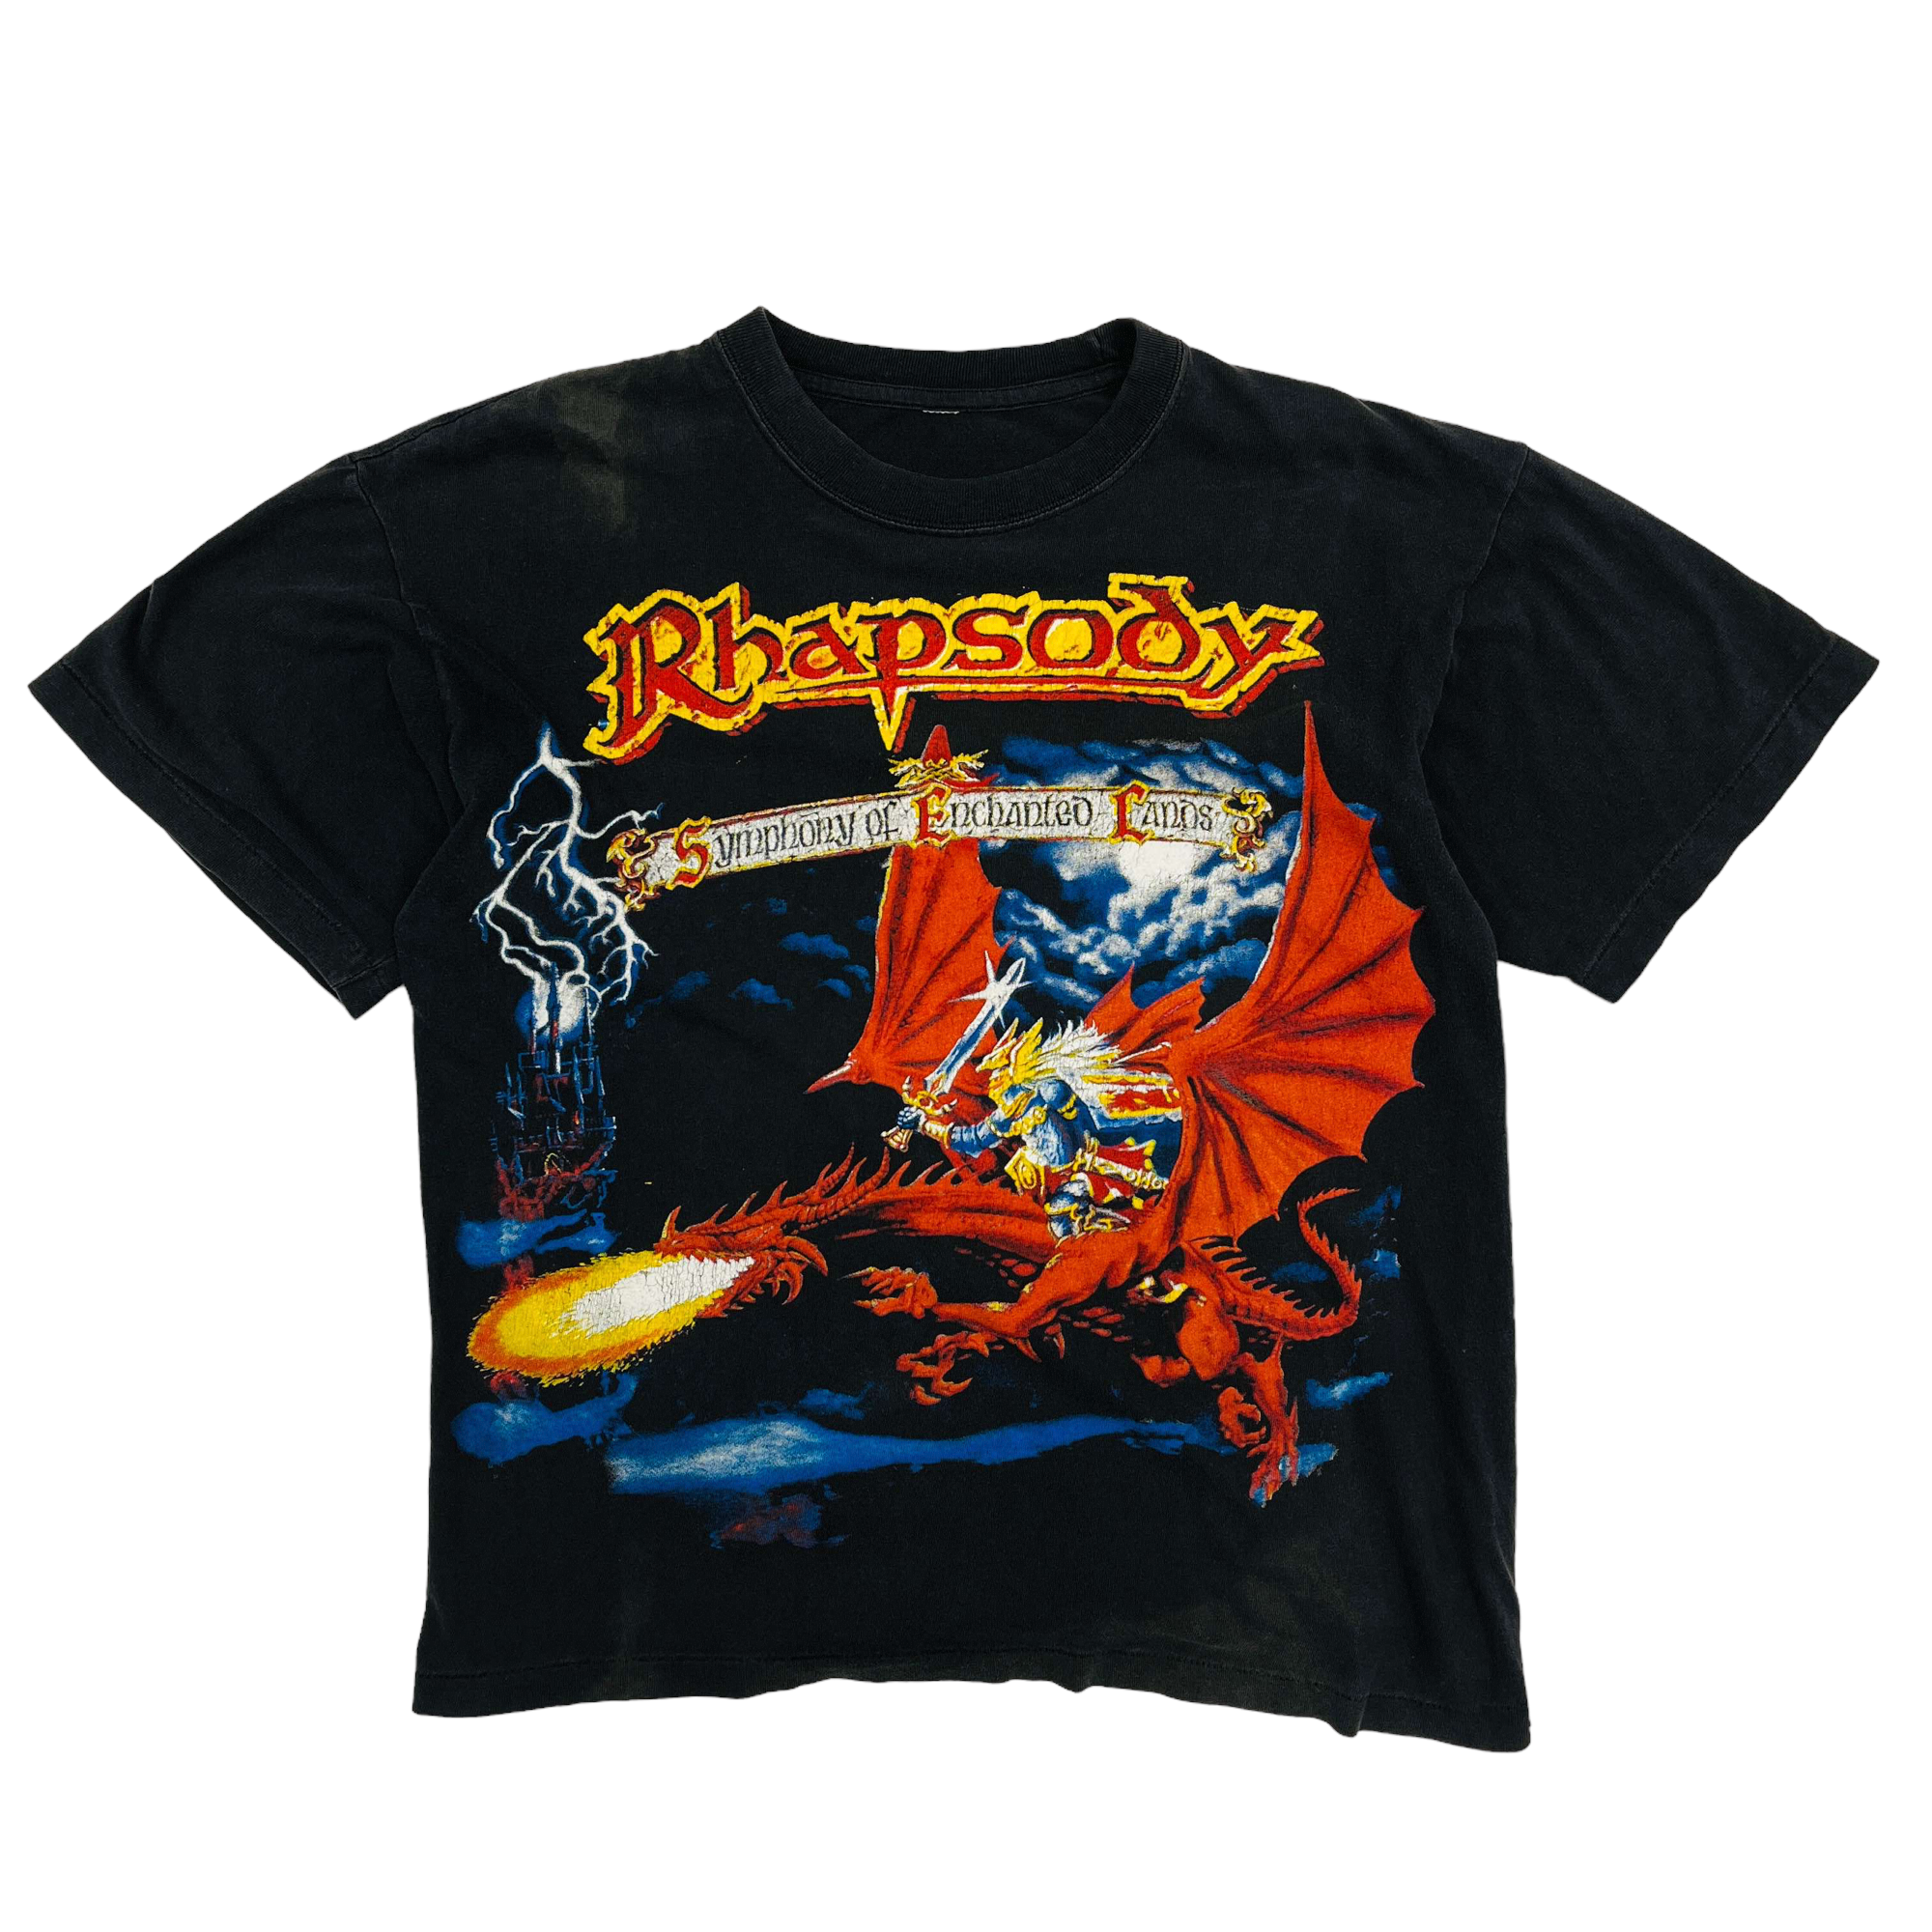 1998 Rhapsody: Symphony of Enchanted Lands Graphic T-Shirt - Medium